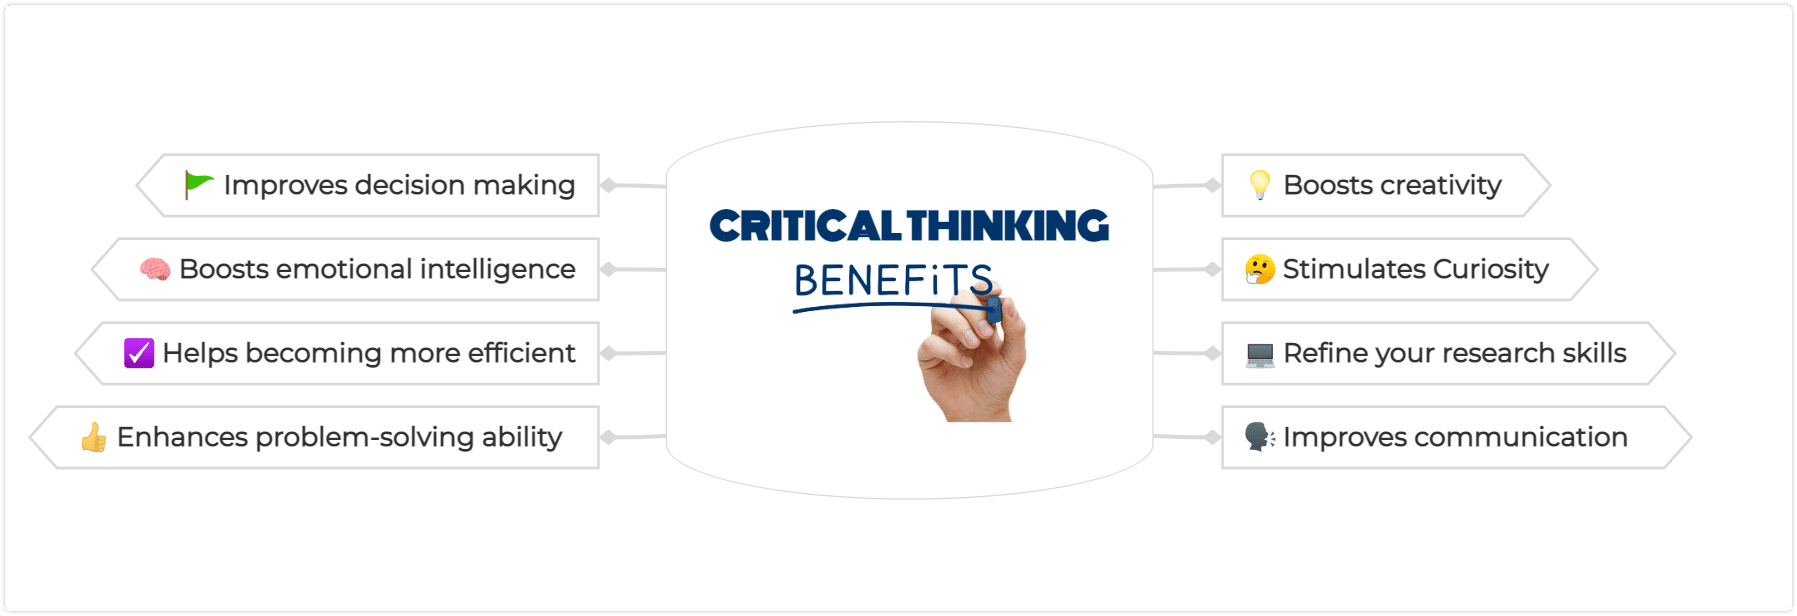 Critical thinking benefits